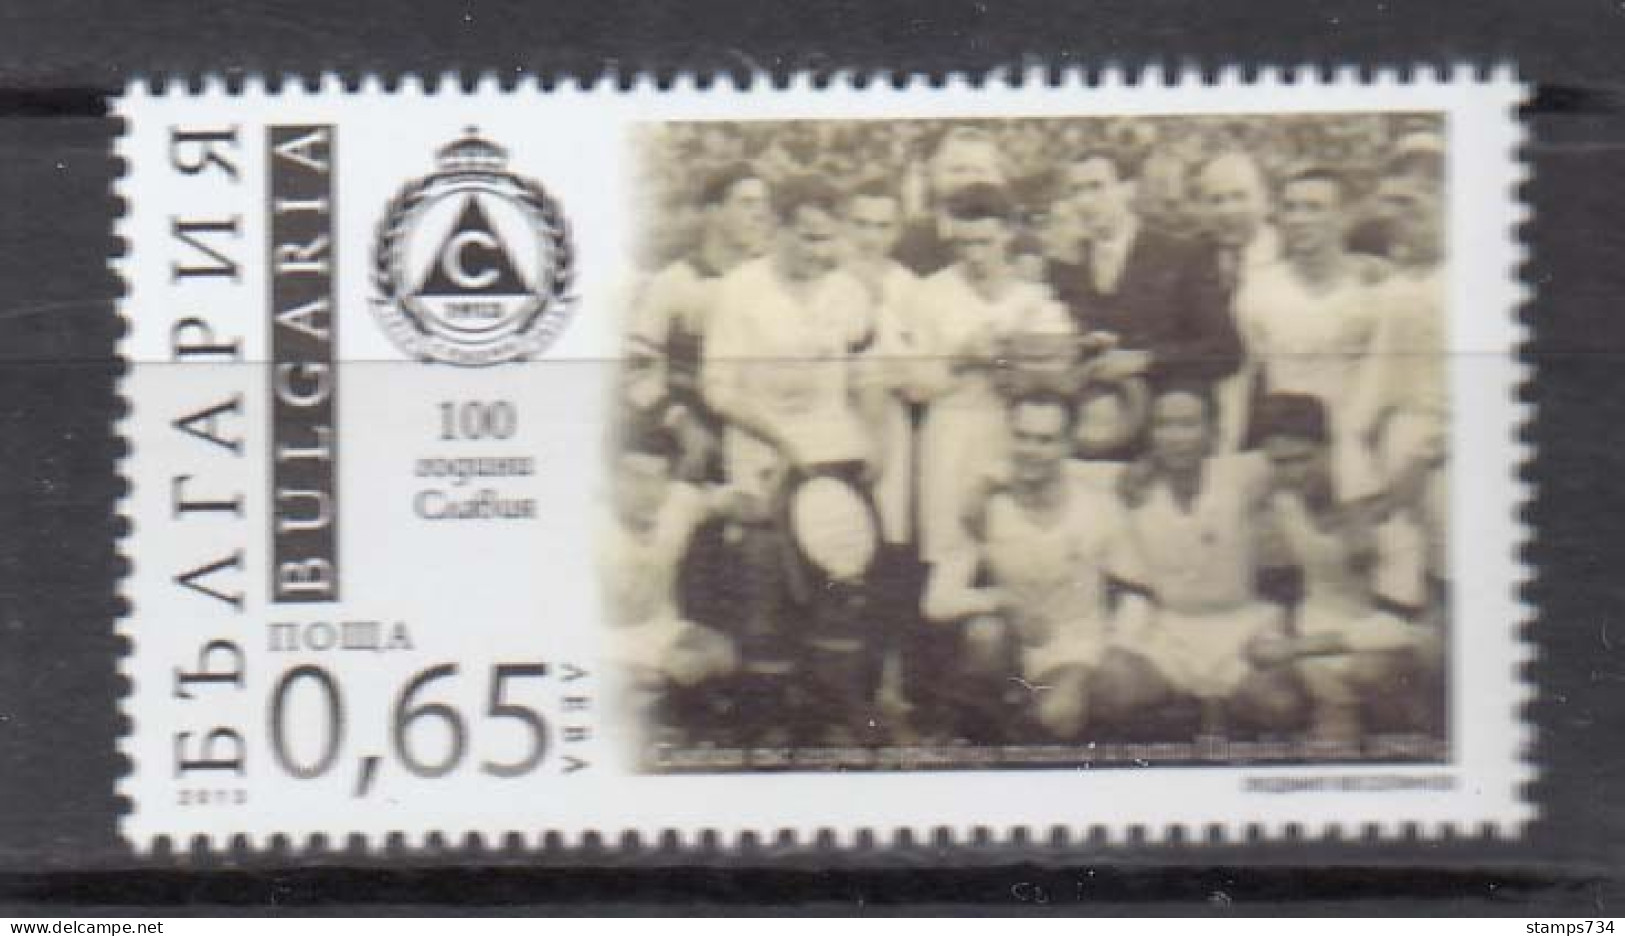 Bulgaria 2013 - 100 Years Of Football Club PFK SLAVIA, Mi-Nr. 5085, MNH** - Unused Stamps